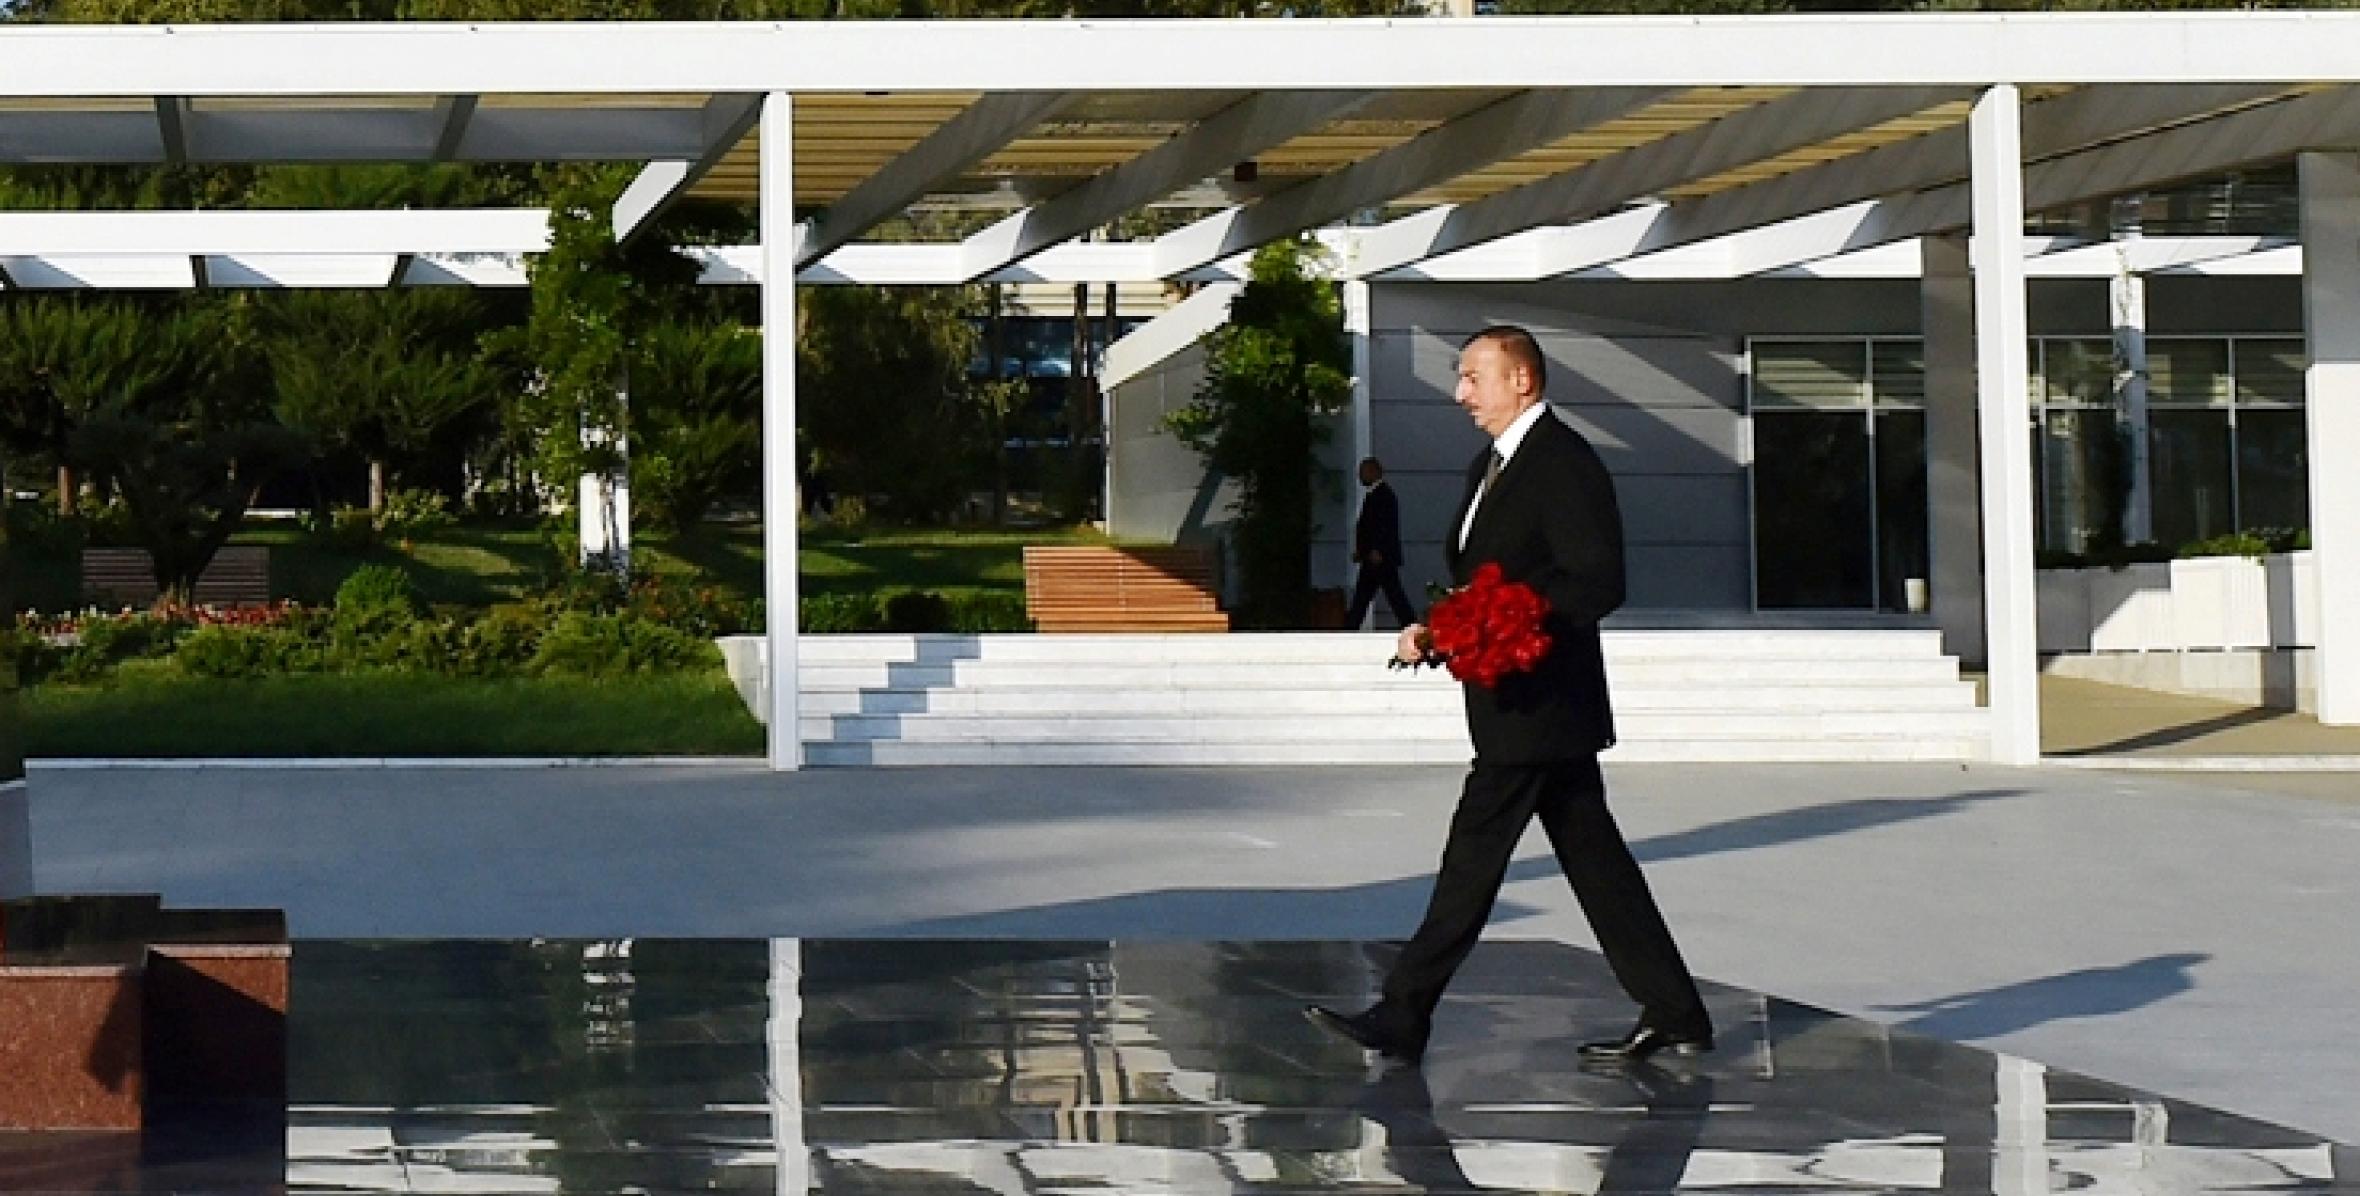 Ilham Aliyev arrived in Mingachevir for a visit